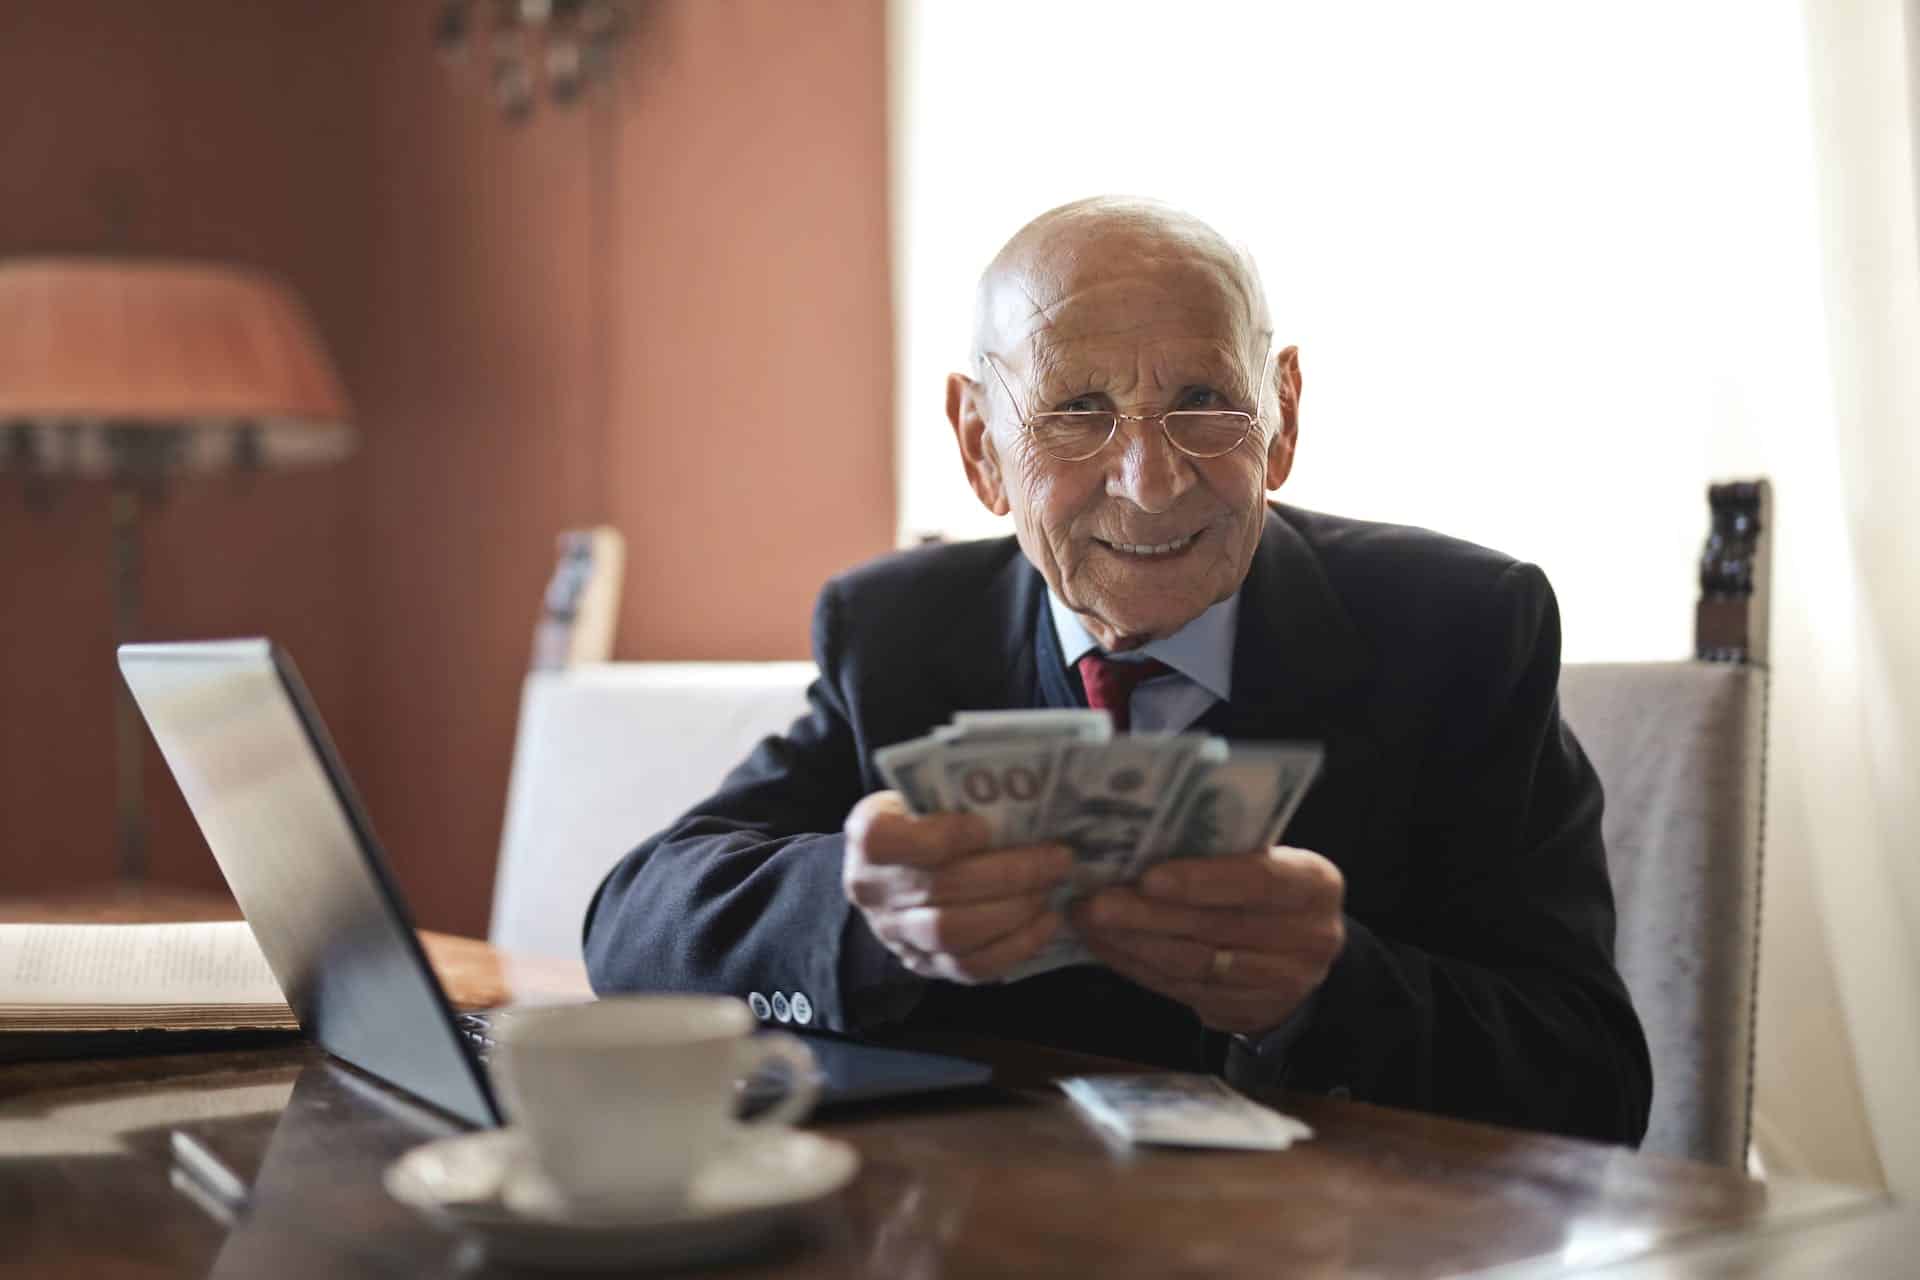 Old man holding dollar bills